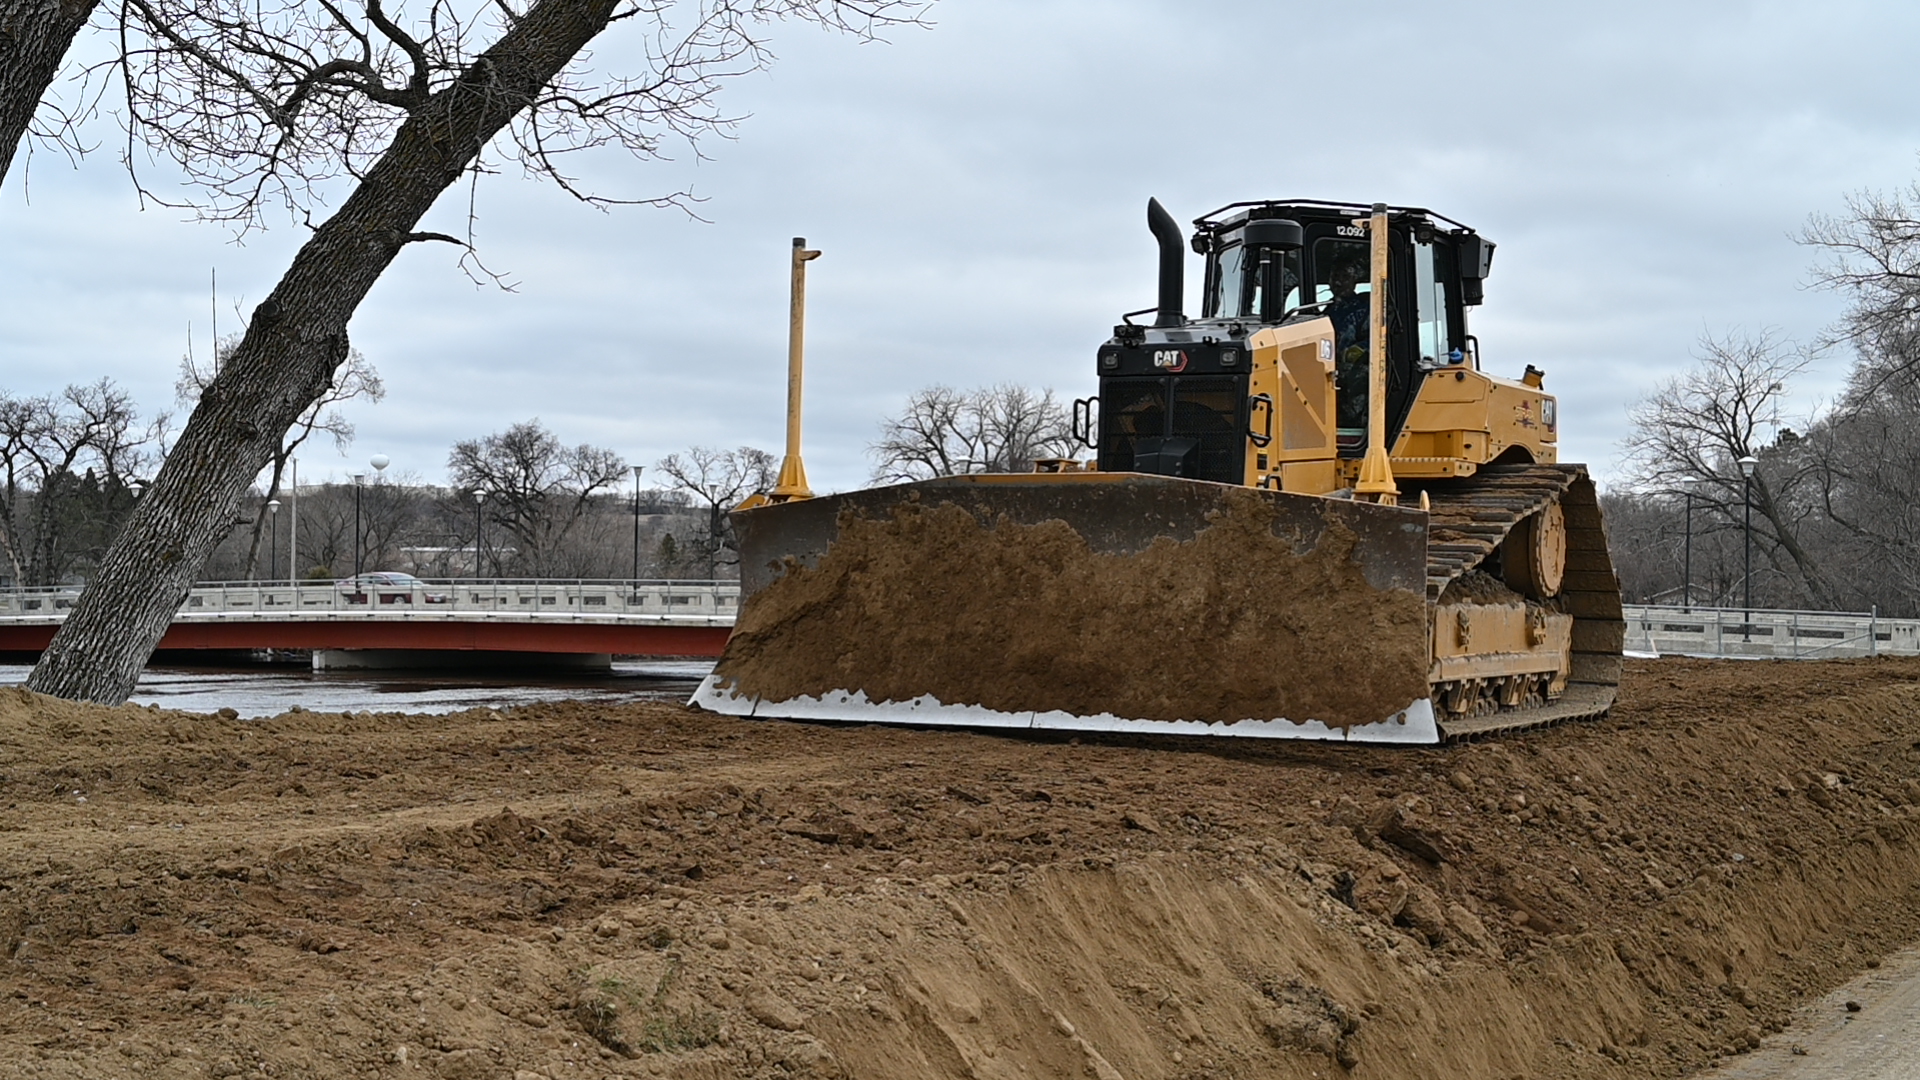  a bulldozer plows some dirt